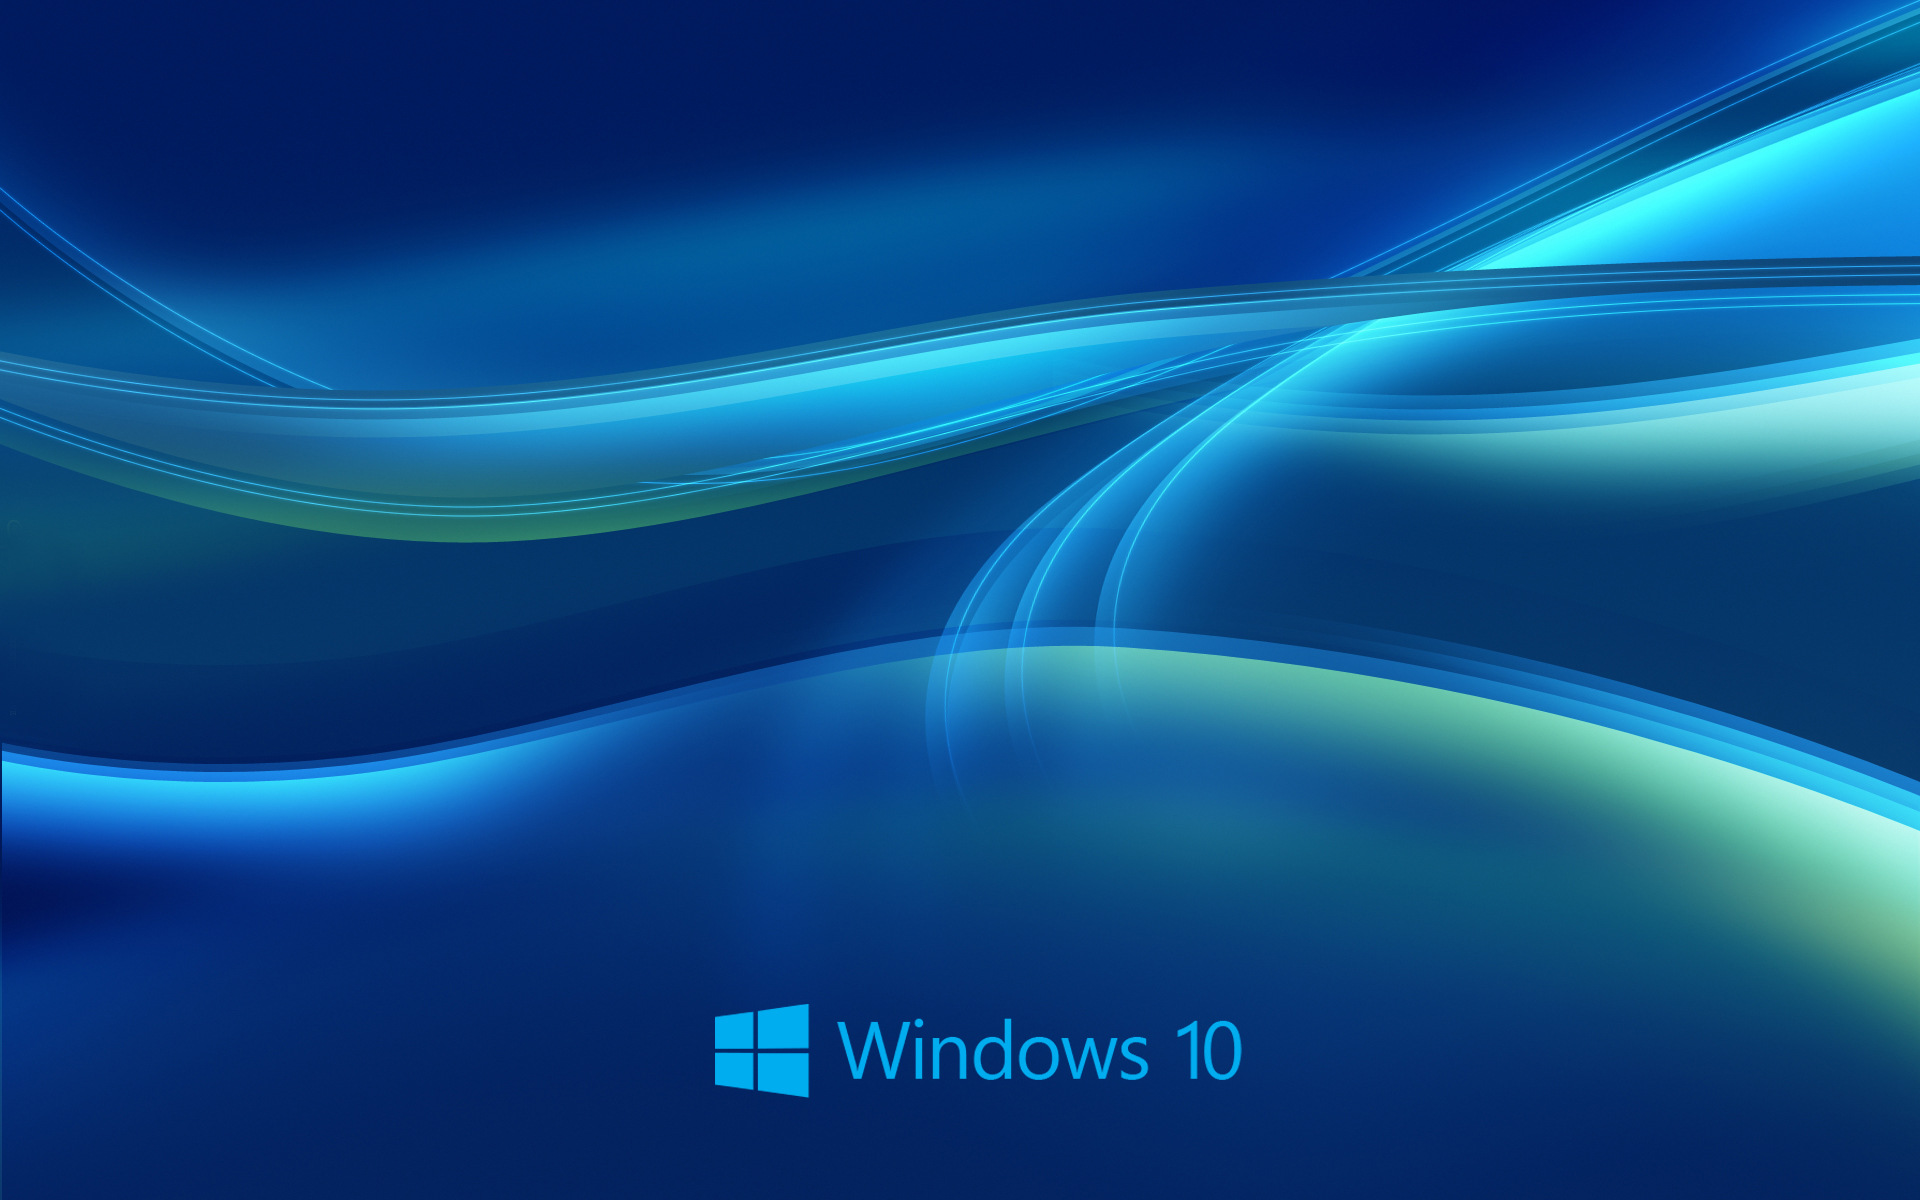 Windows 10 Wallpapers 10